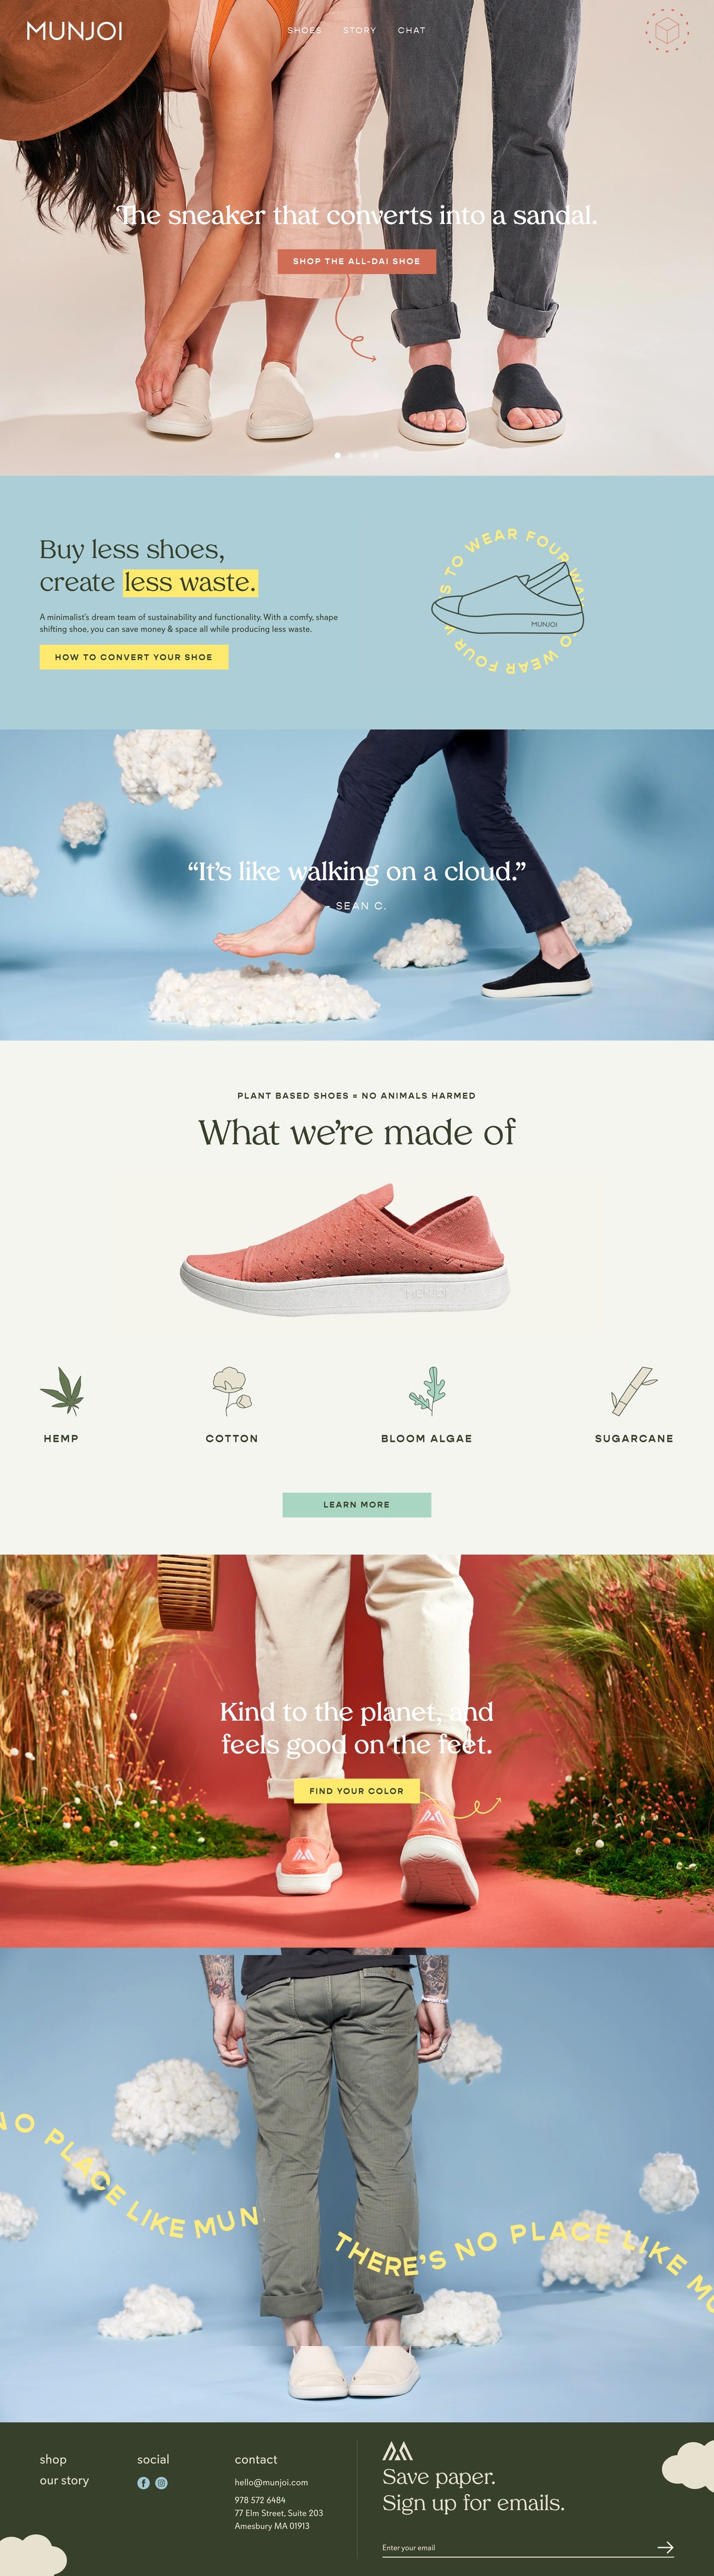 Munjoi鞋品牌网站设计